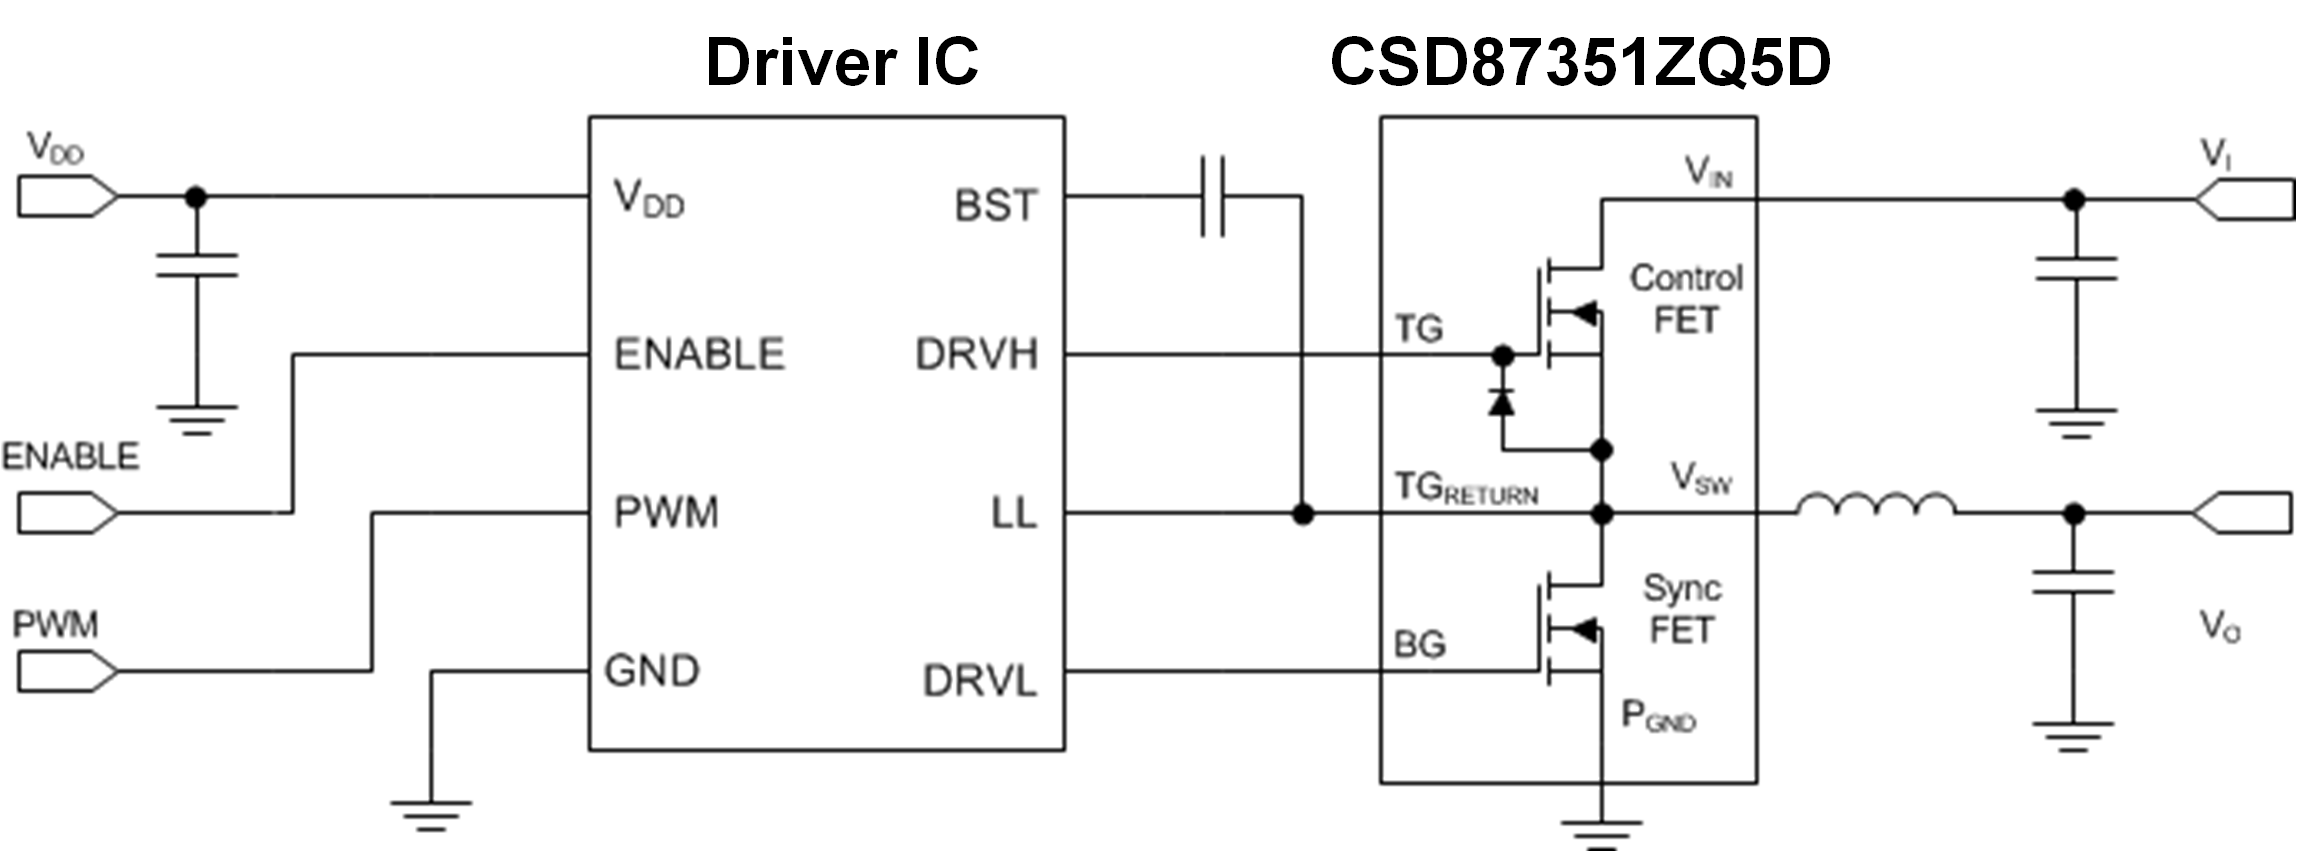 CSD87351ZQ5D Typical_Circuit.png